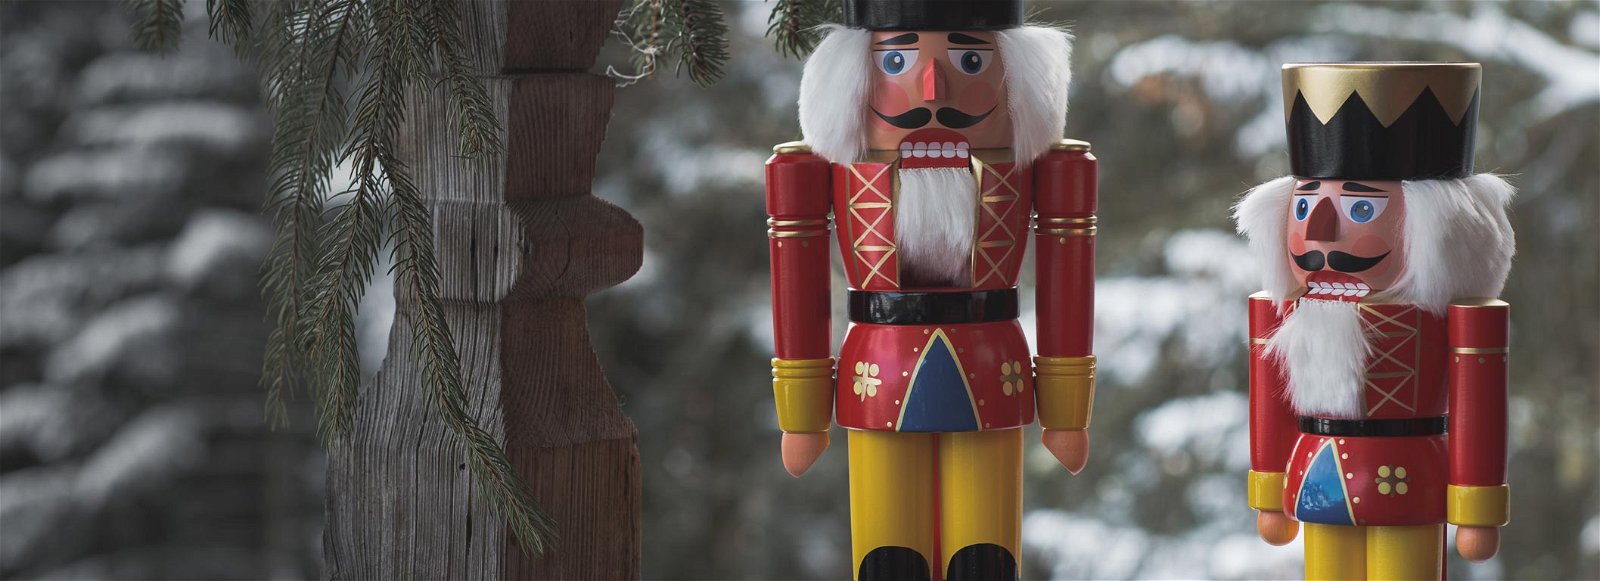 Mini-Nussknacker KÖNIG rot Erzgebirge NEU Weihnachten Volkskunst Nutcracker Holz 